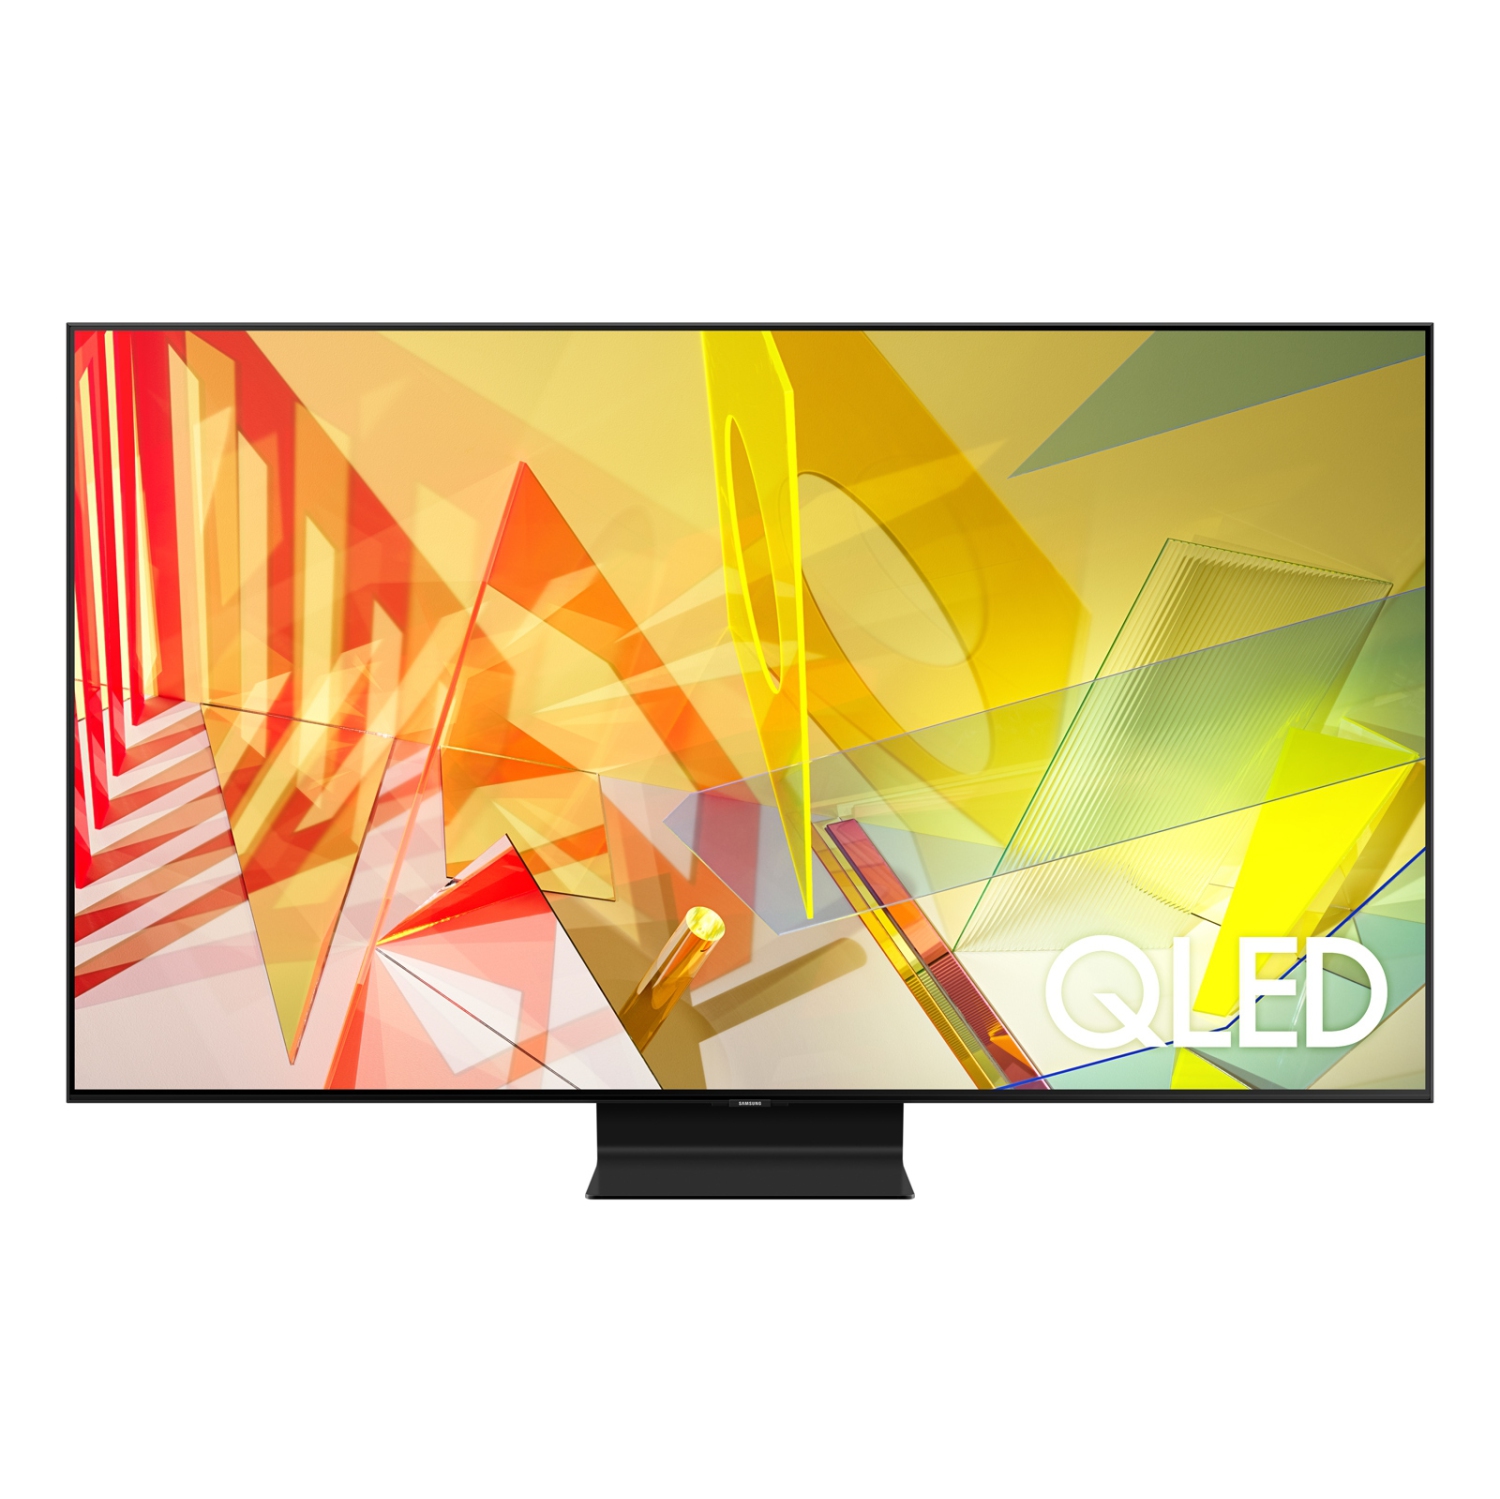 Refurbished (Good) - SAMSUNG QN55Q90T 55" CLASS Q90T QLED 4K UHD HDR SMART TV (2020)